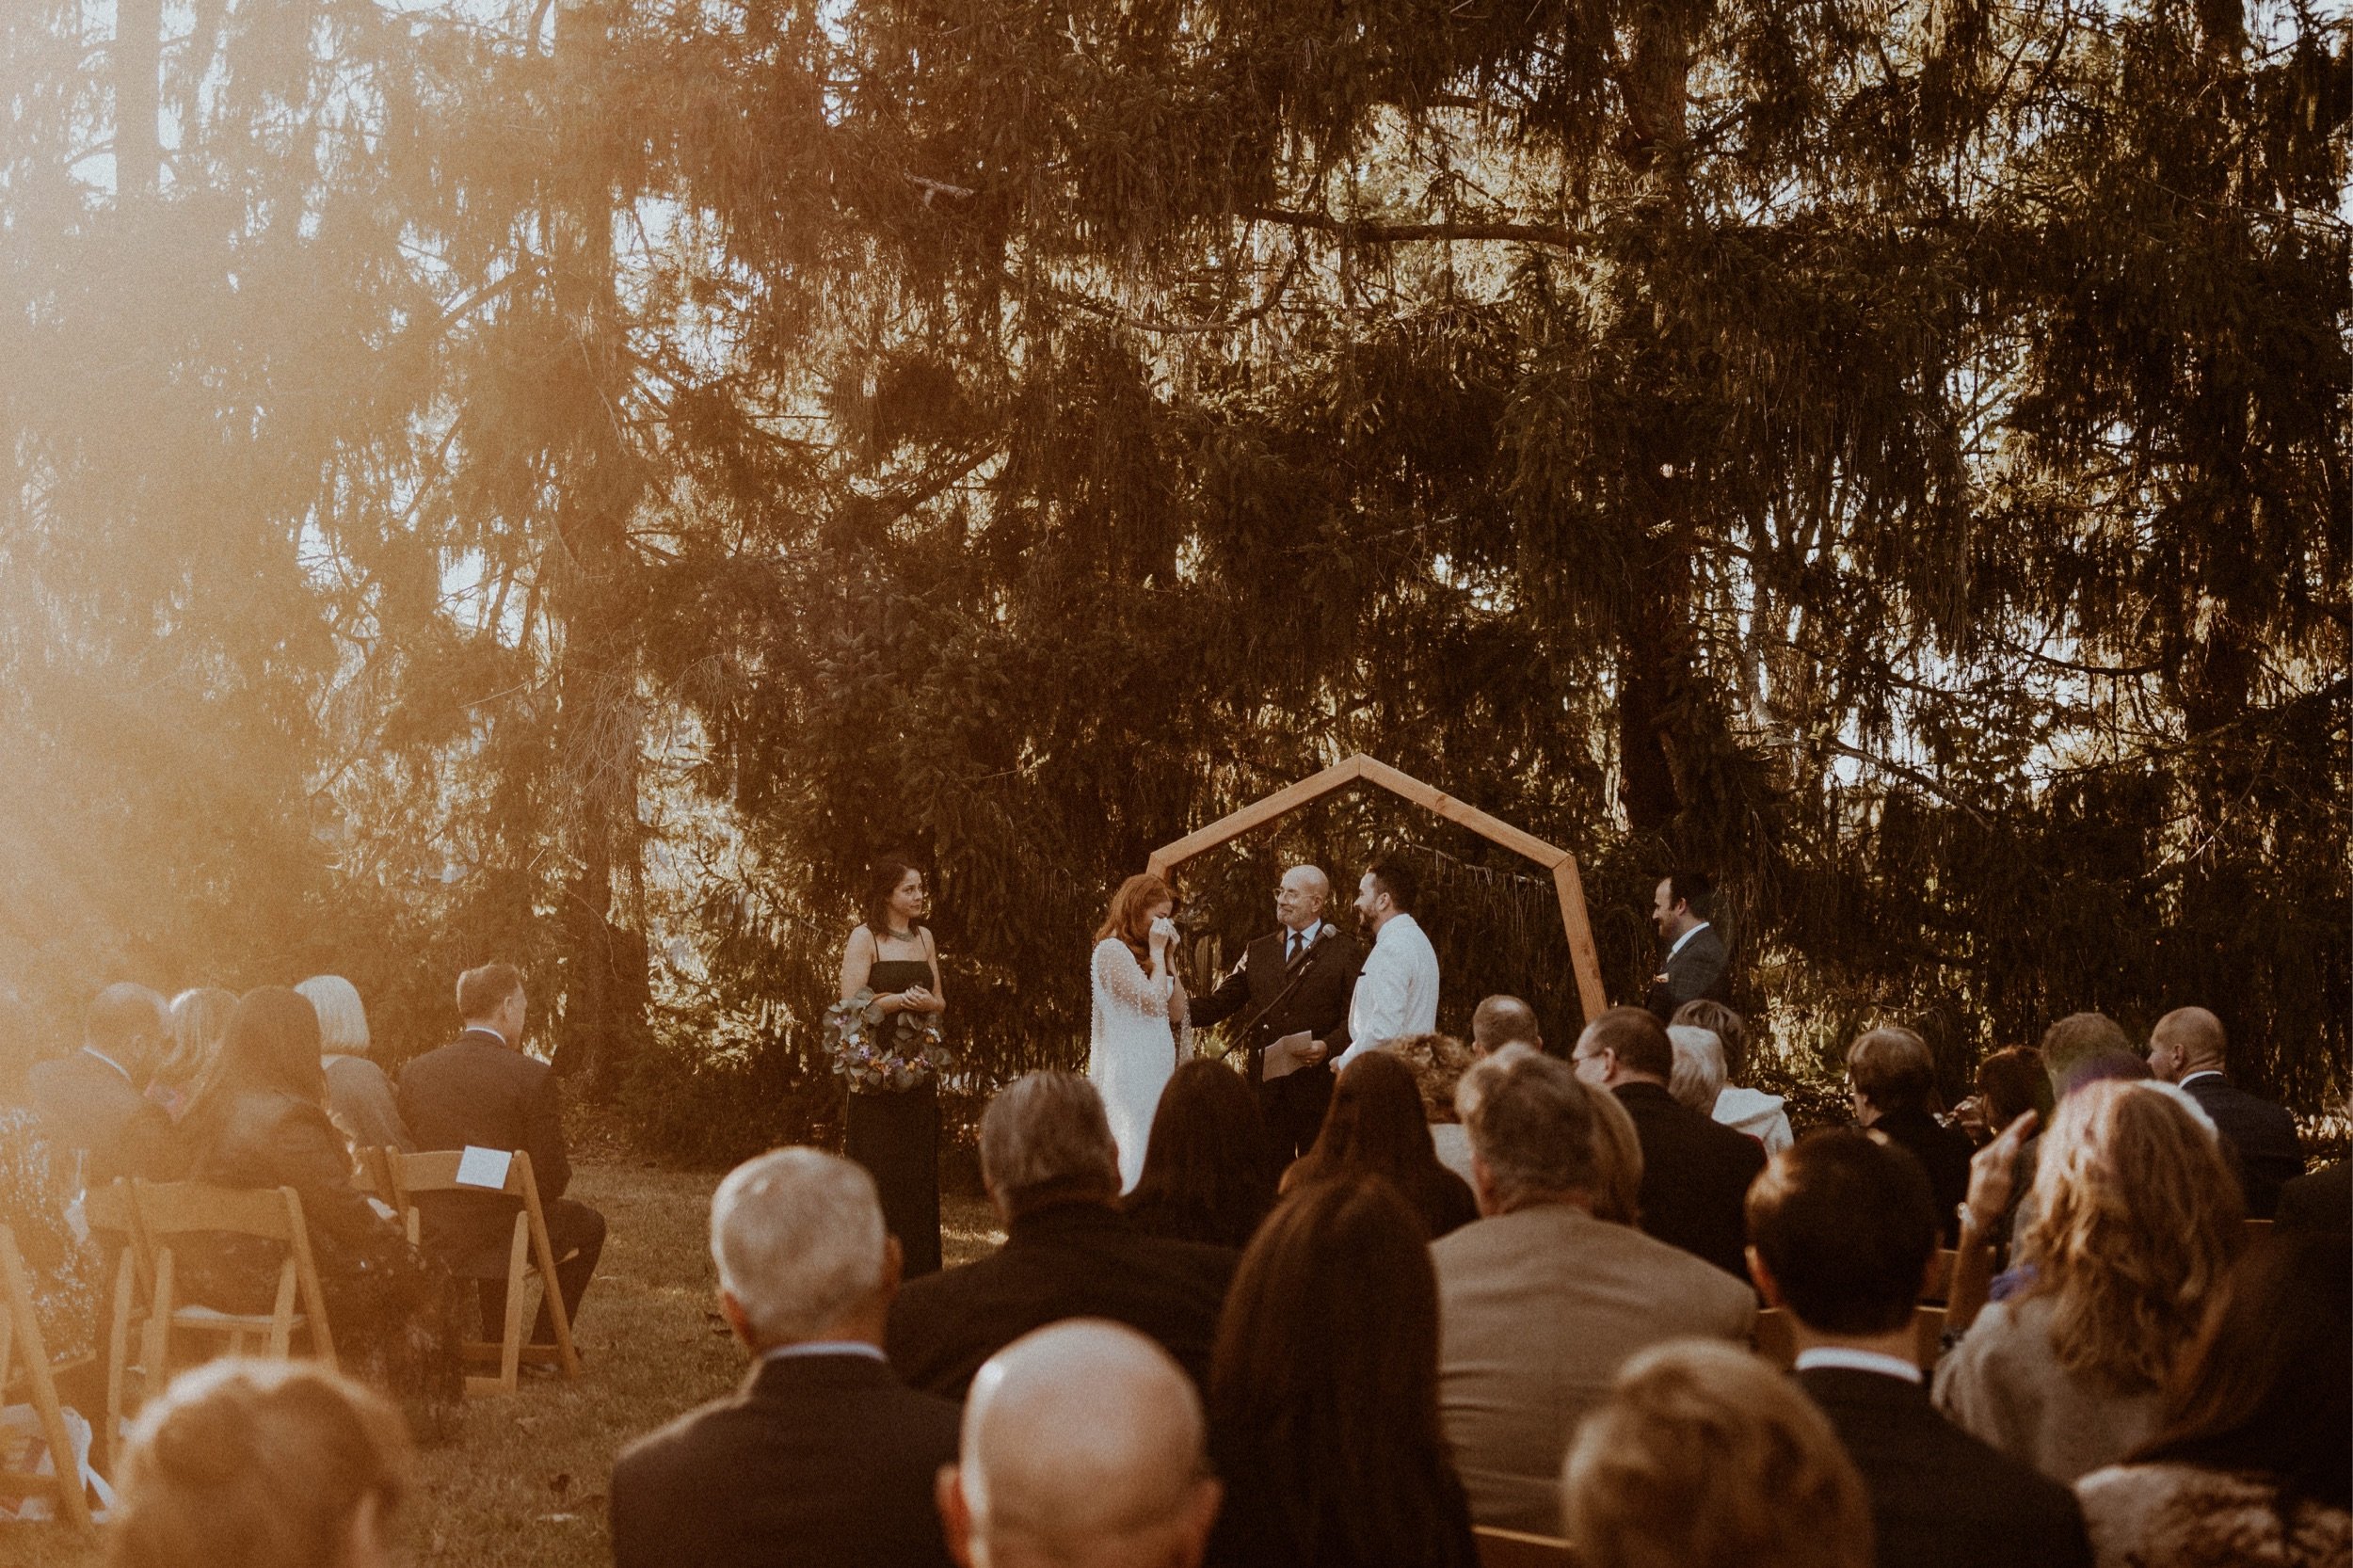 070_Timeless Backyard Wedding in Rhode Island - Vanessa Alves Photography.jpg